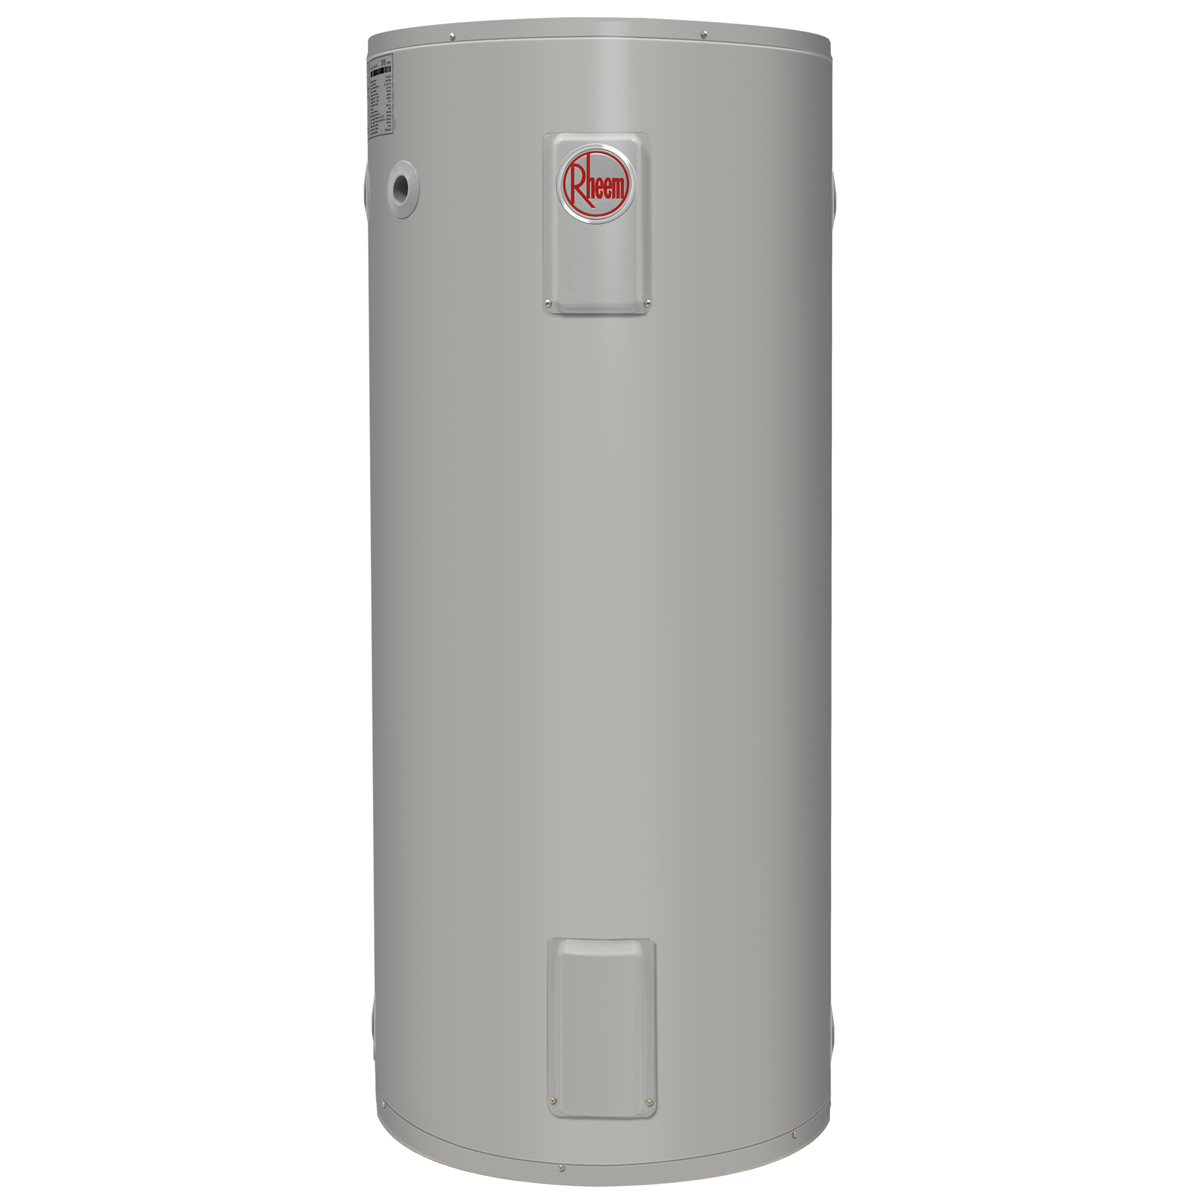 Rheem 315 litre electric hot water heater price Sunshine Caost